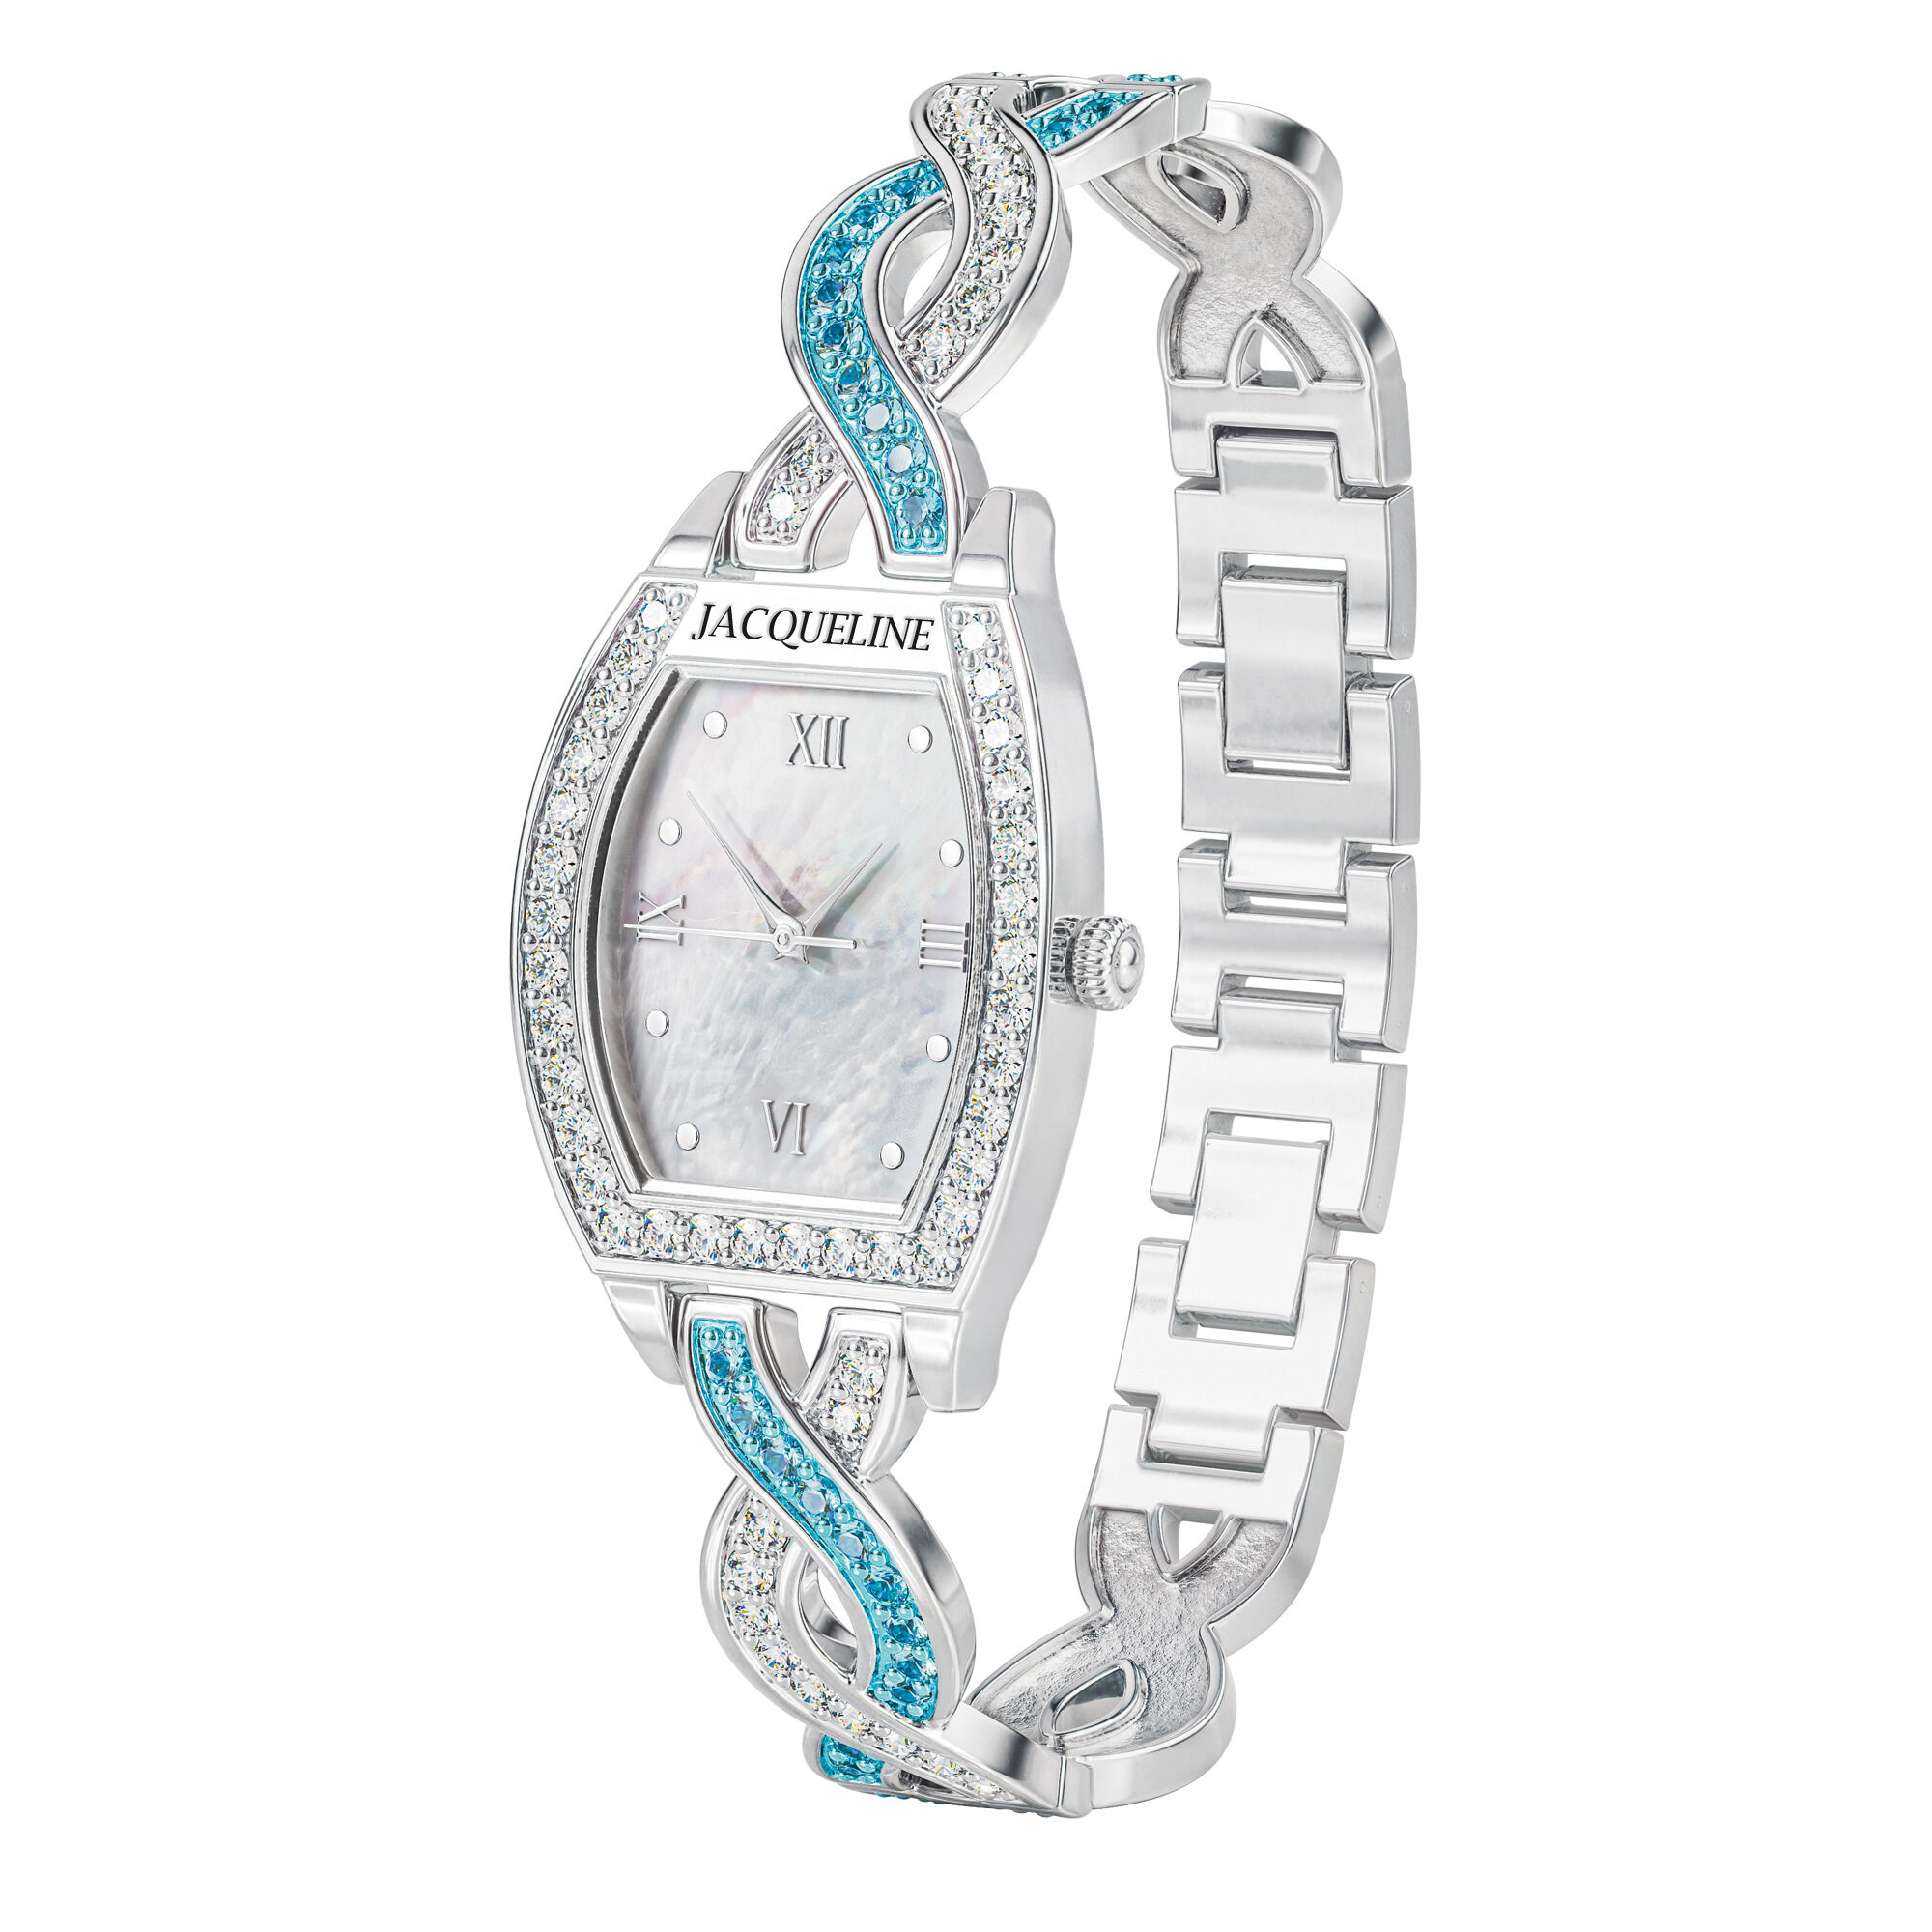 Birthstone Bracelet Watch 10148 0010 c march